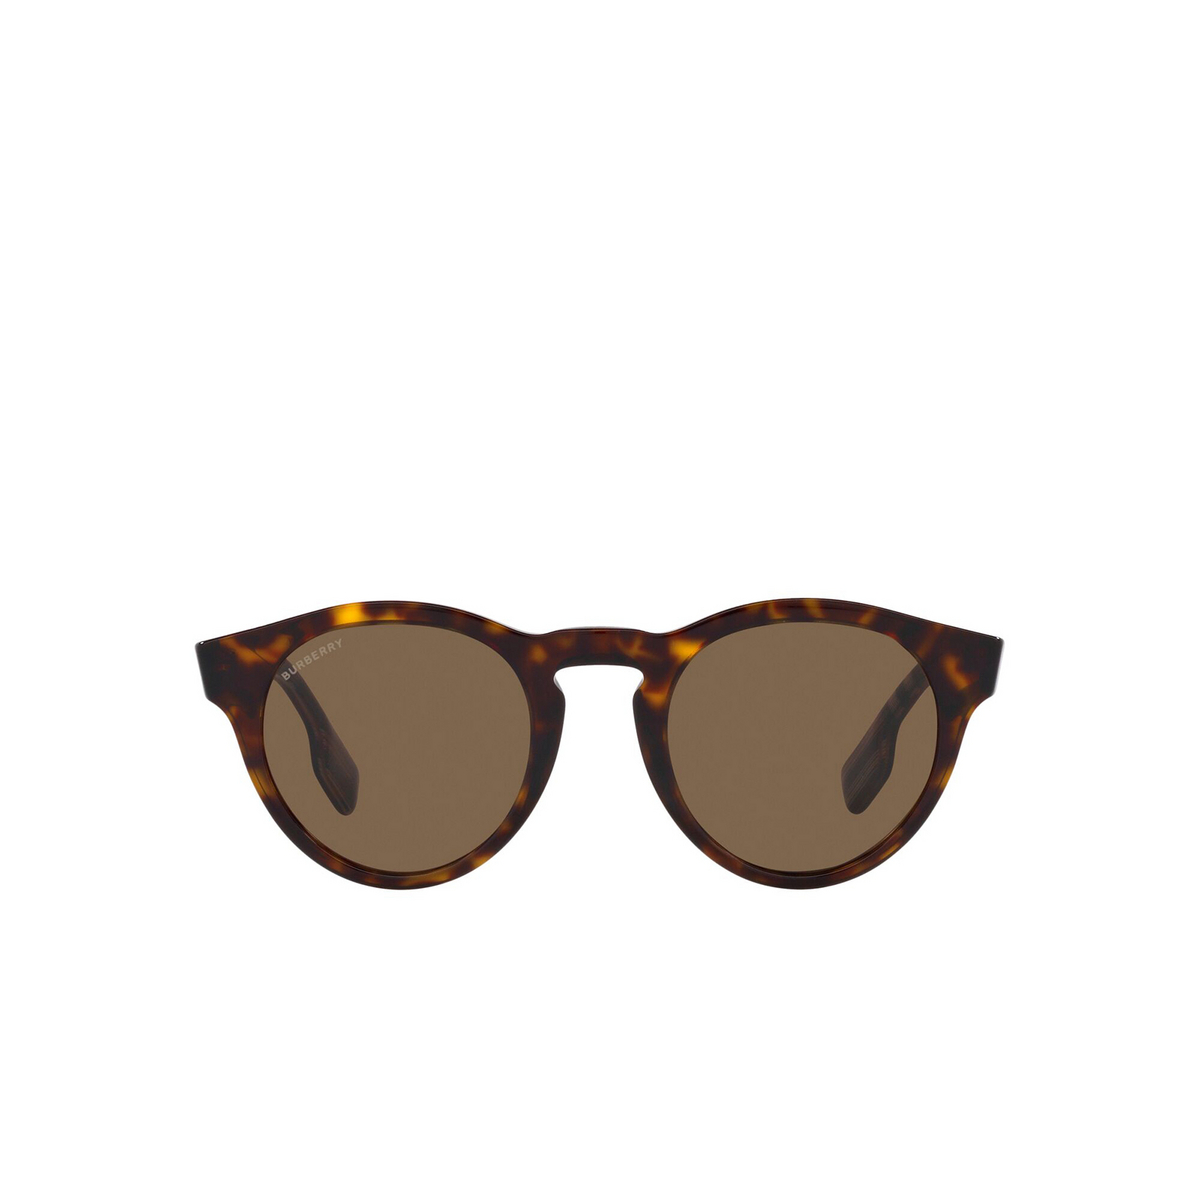 Burberry® Round Sunglasses: BE4359 Reid color 399173 Dark Havana - front view